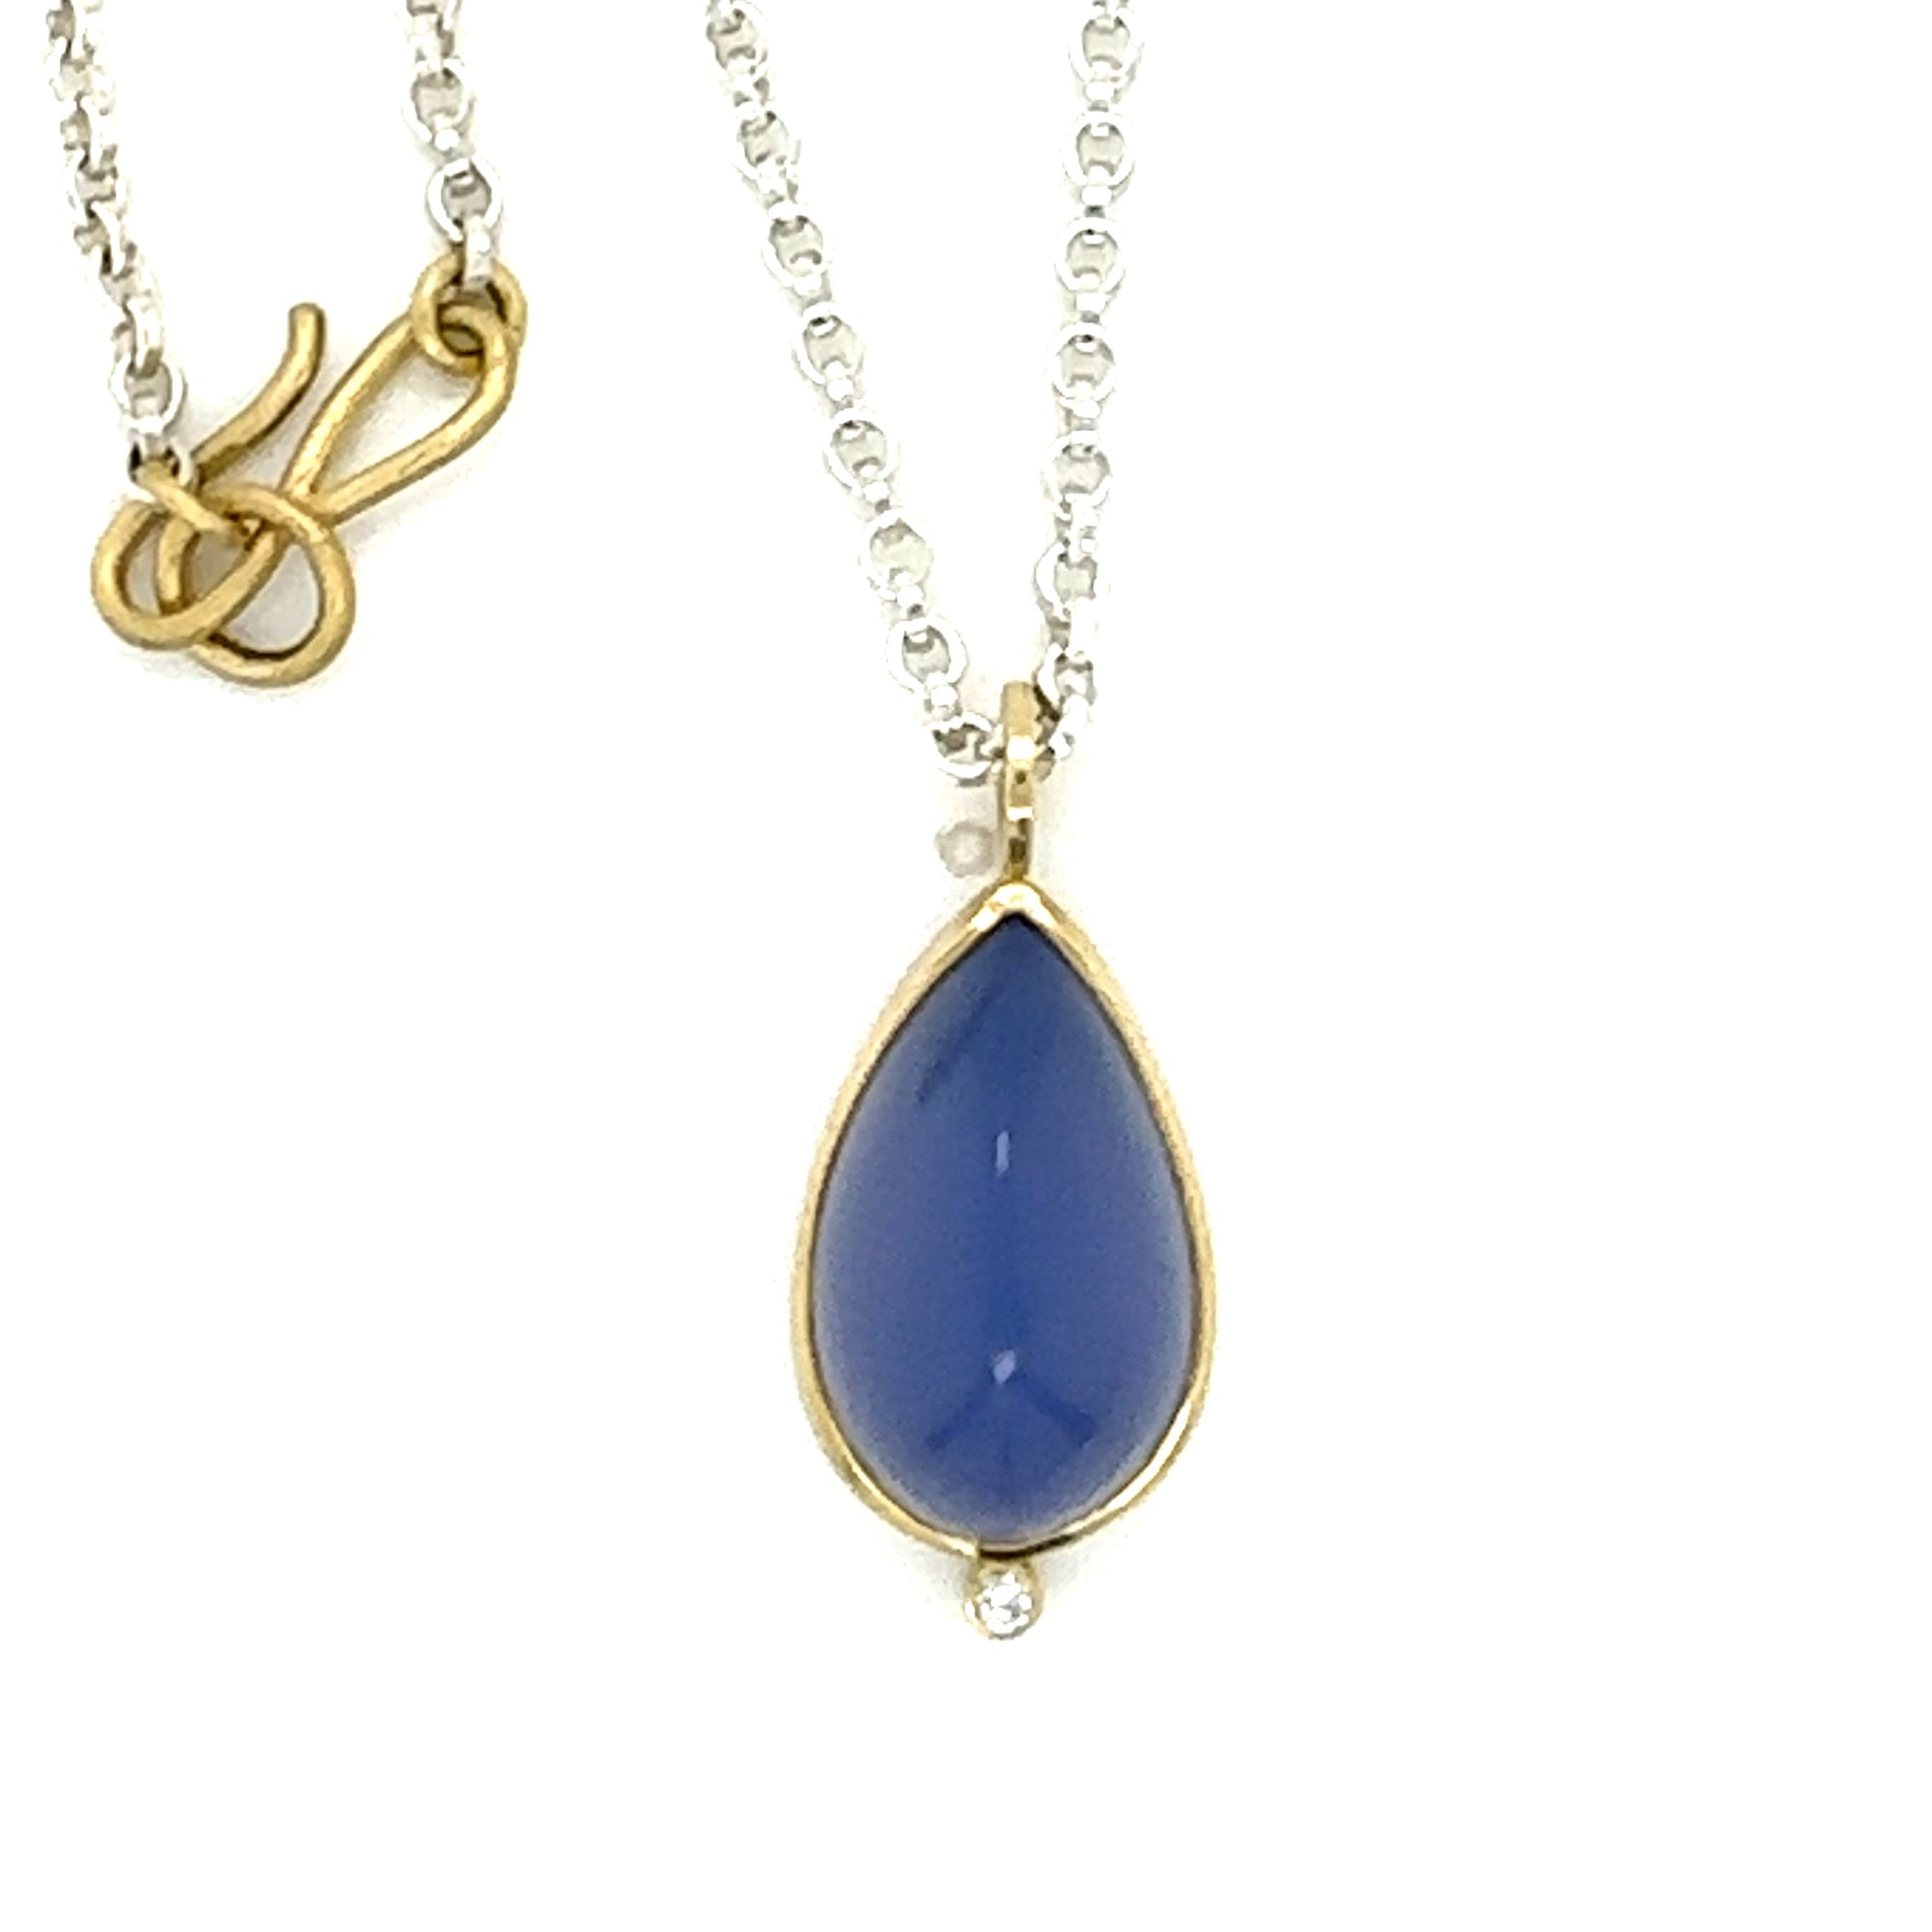 Teardrop Blue Chalcedony necklace